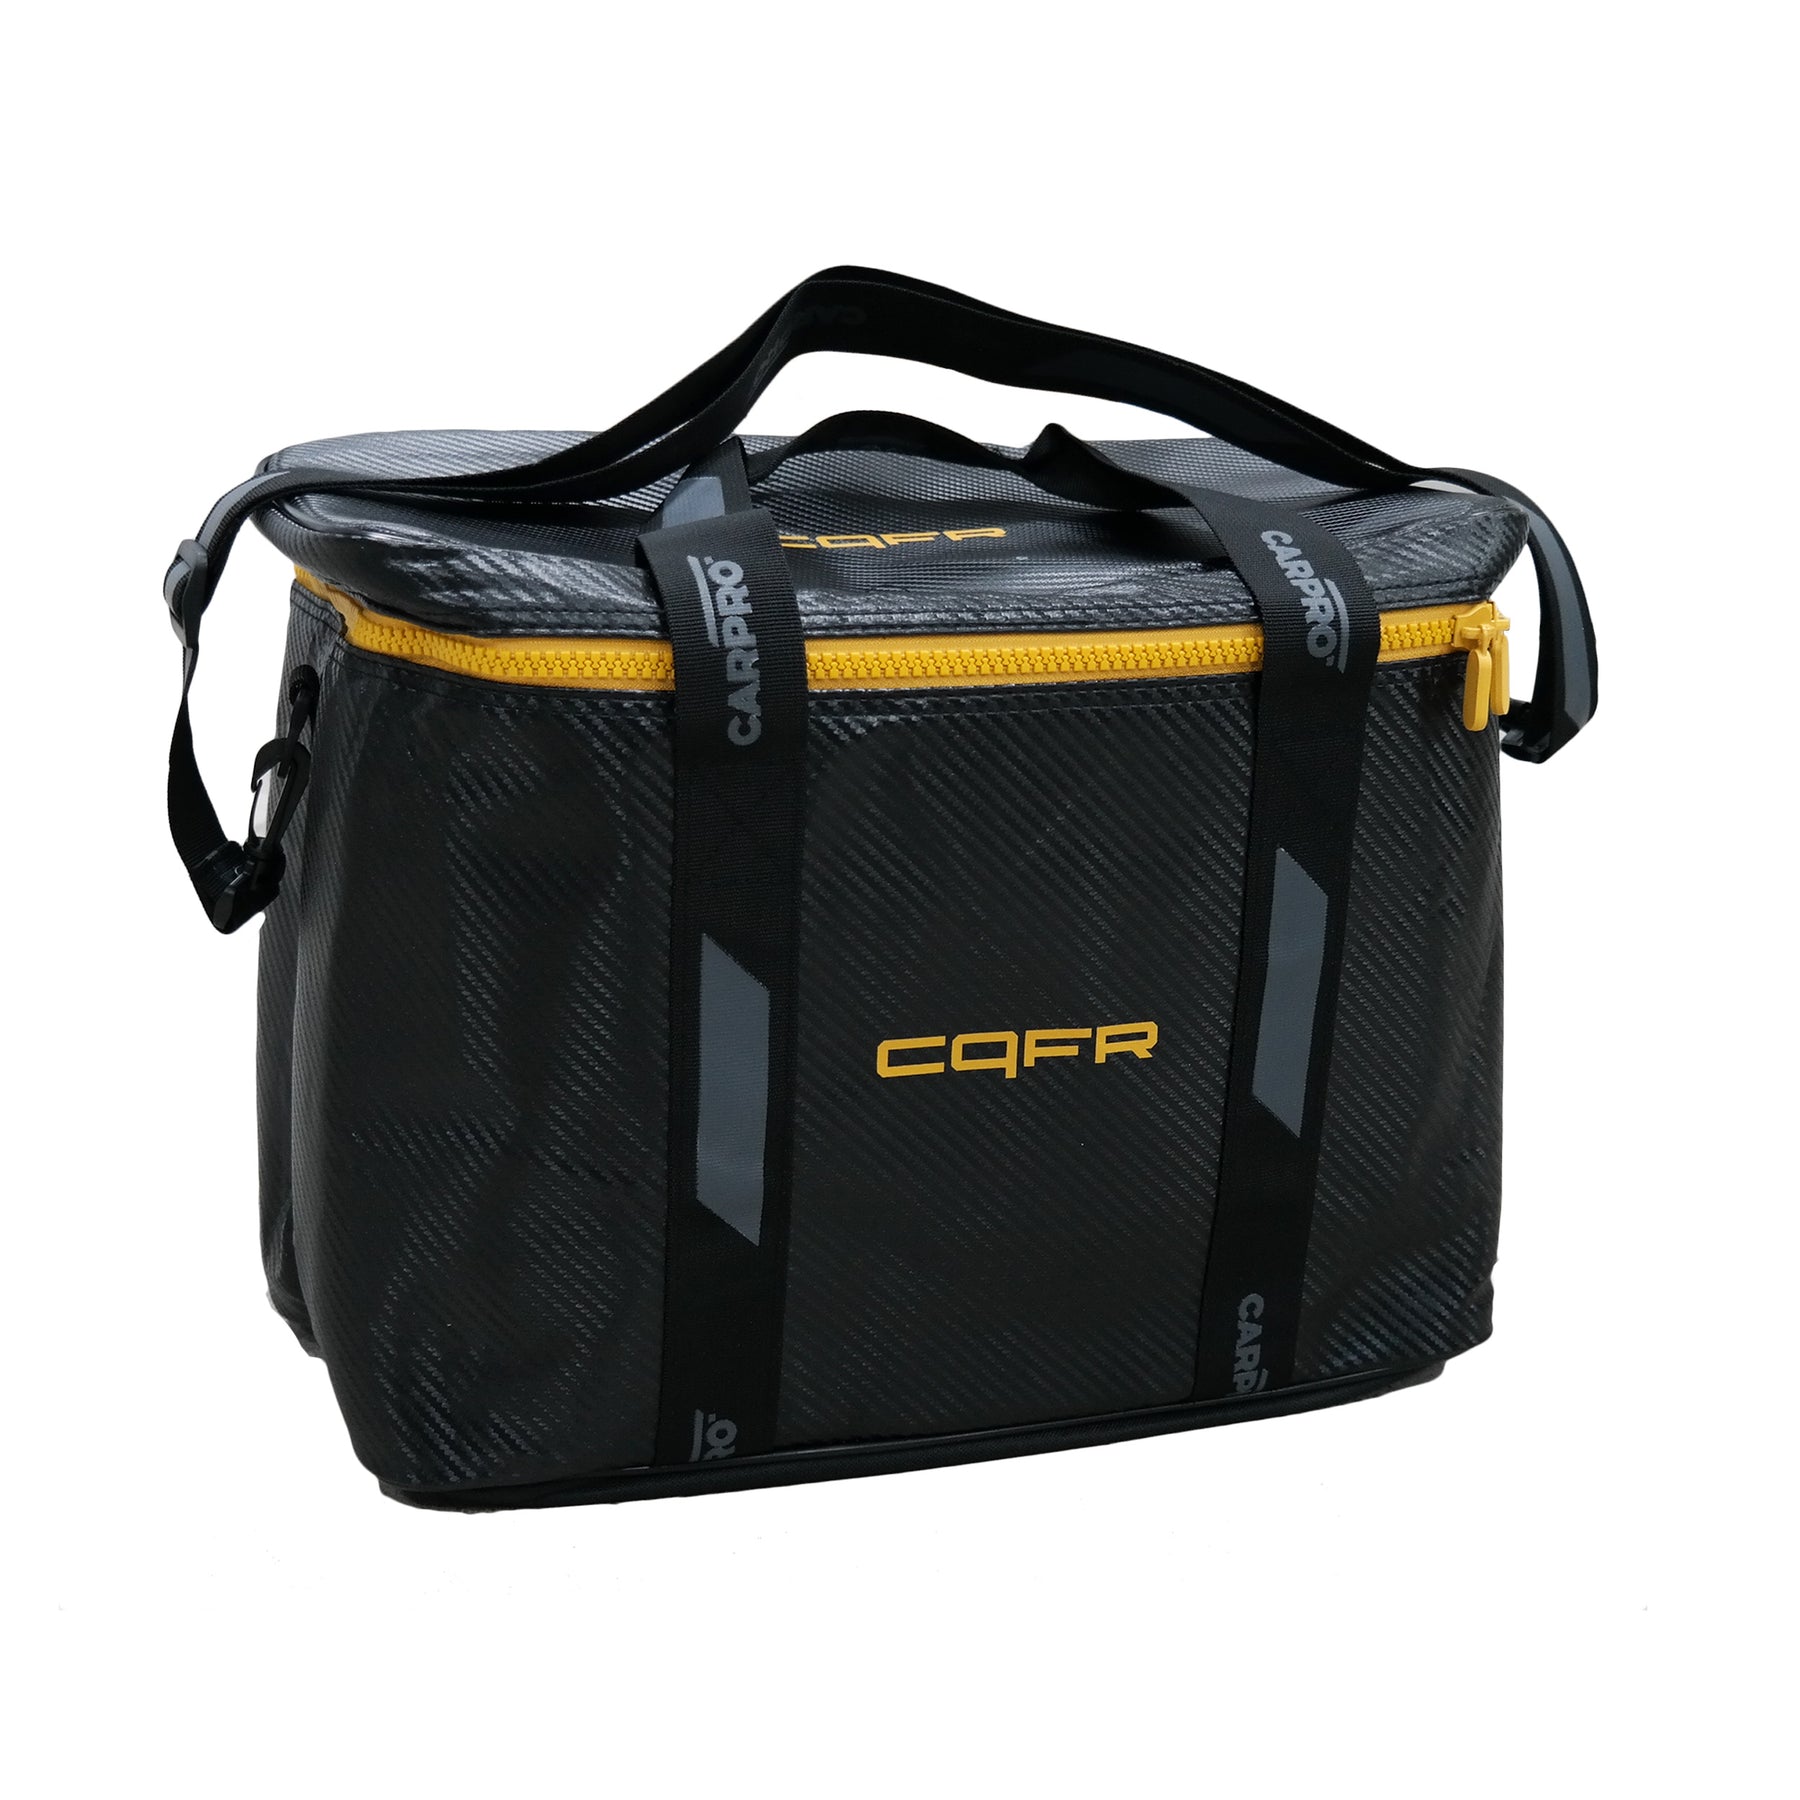 CARPRO CQFR Maintainence Bag Kit